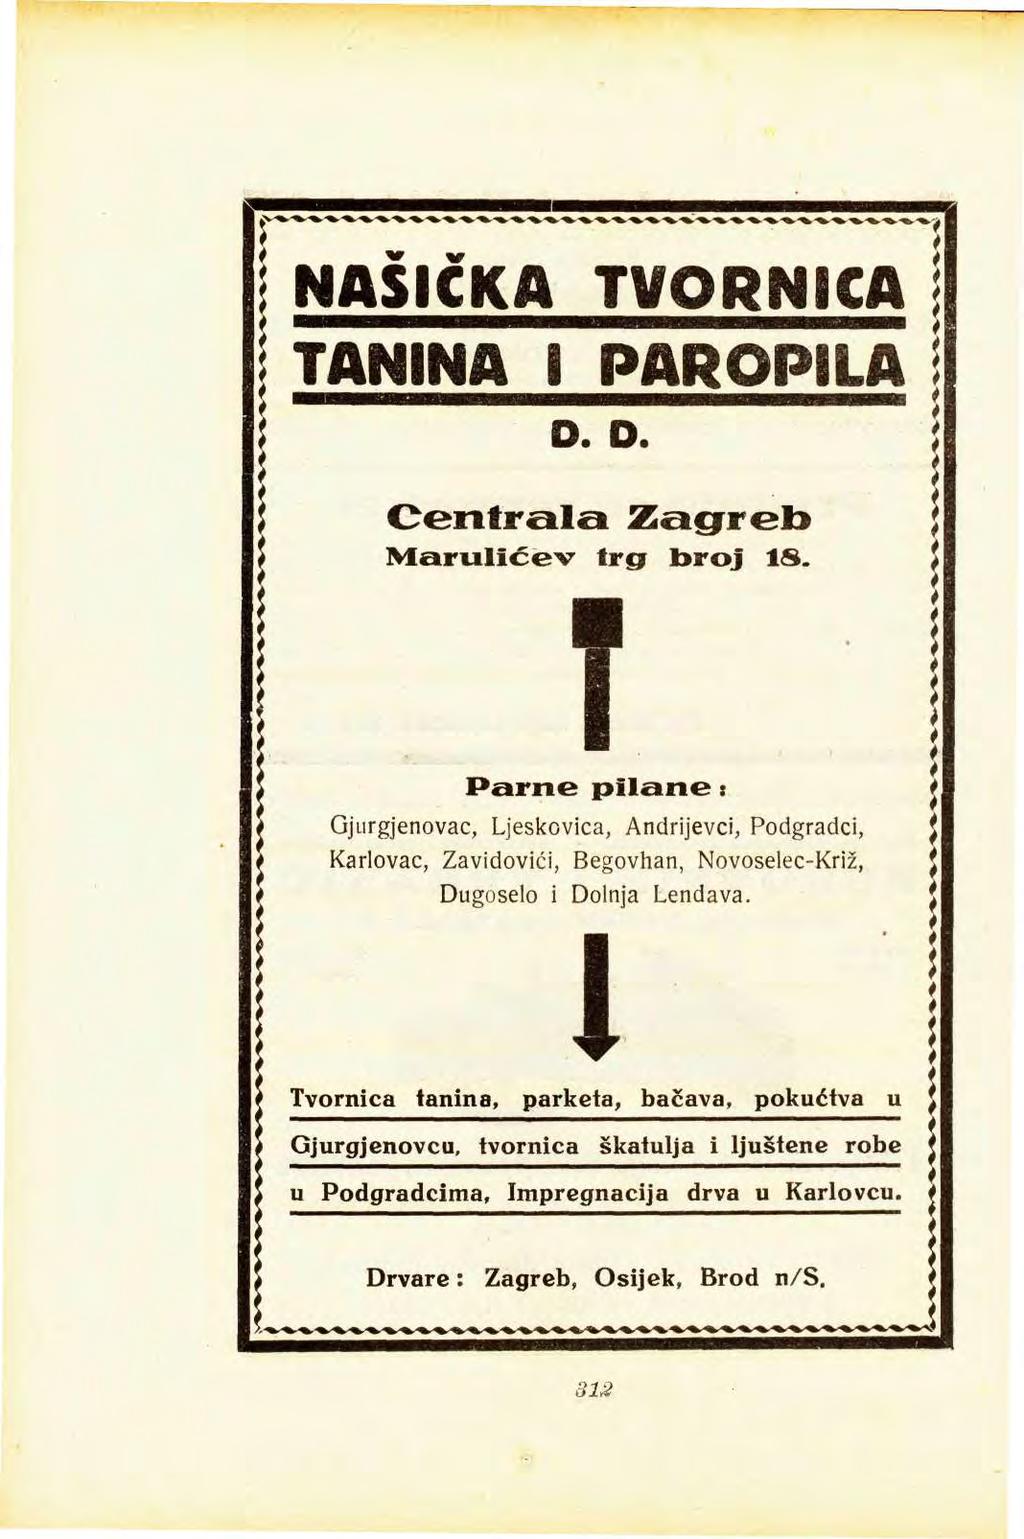 NASKKA TVORN ÇA I TANINA 8 PAROPILA D. D. Centrala Zagrreb Marulićev trg broj 18.